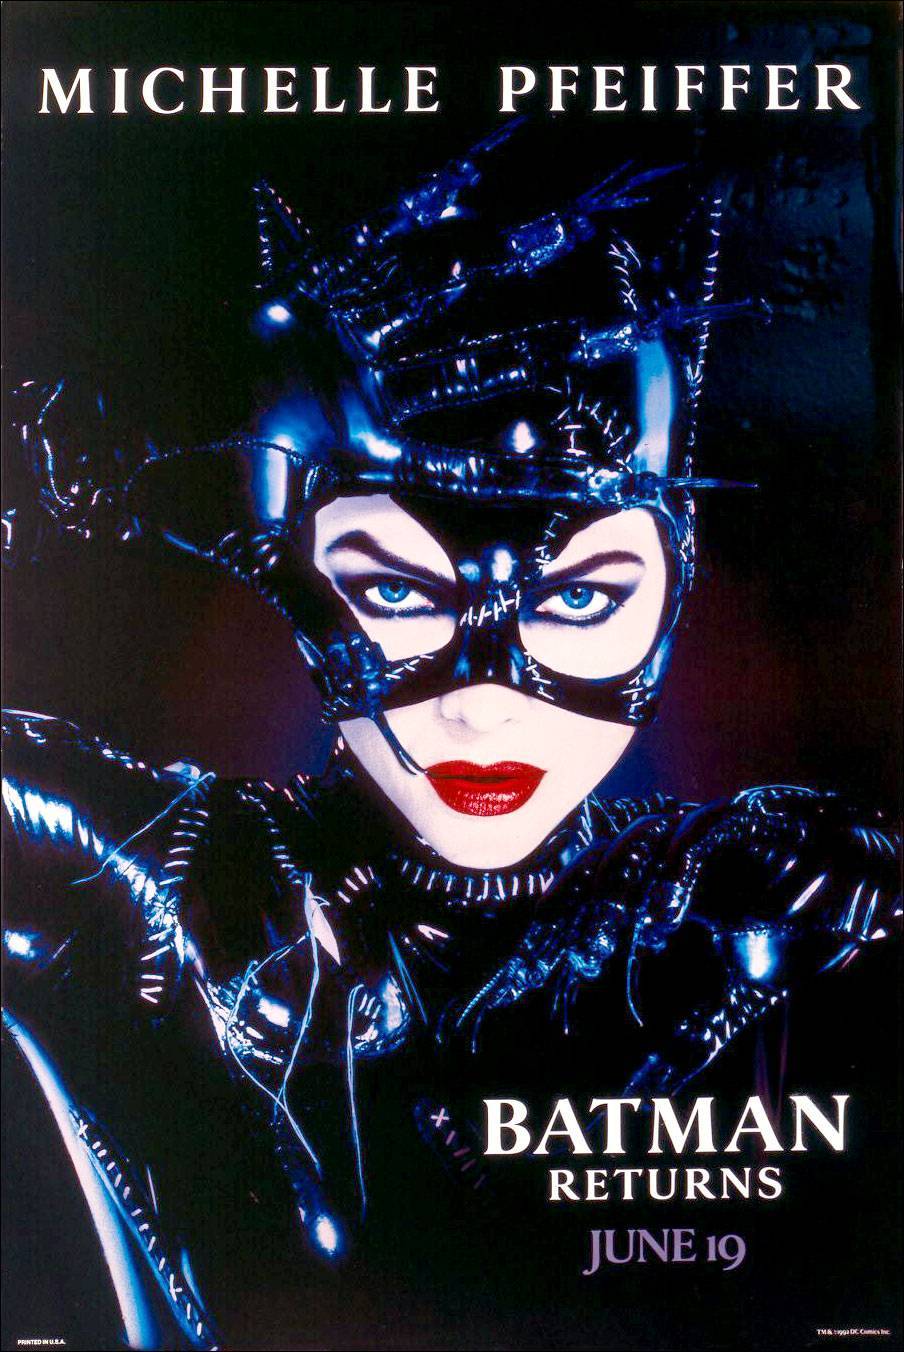 Michelle Pfeiffer como a Mulher-Gato em Batman - O Retorno (Batman Returns, 1991), de Tim Burton.
Visite-nos: Tumblr | Facebook | Twitter | Instagram